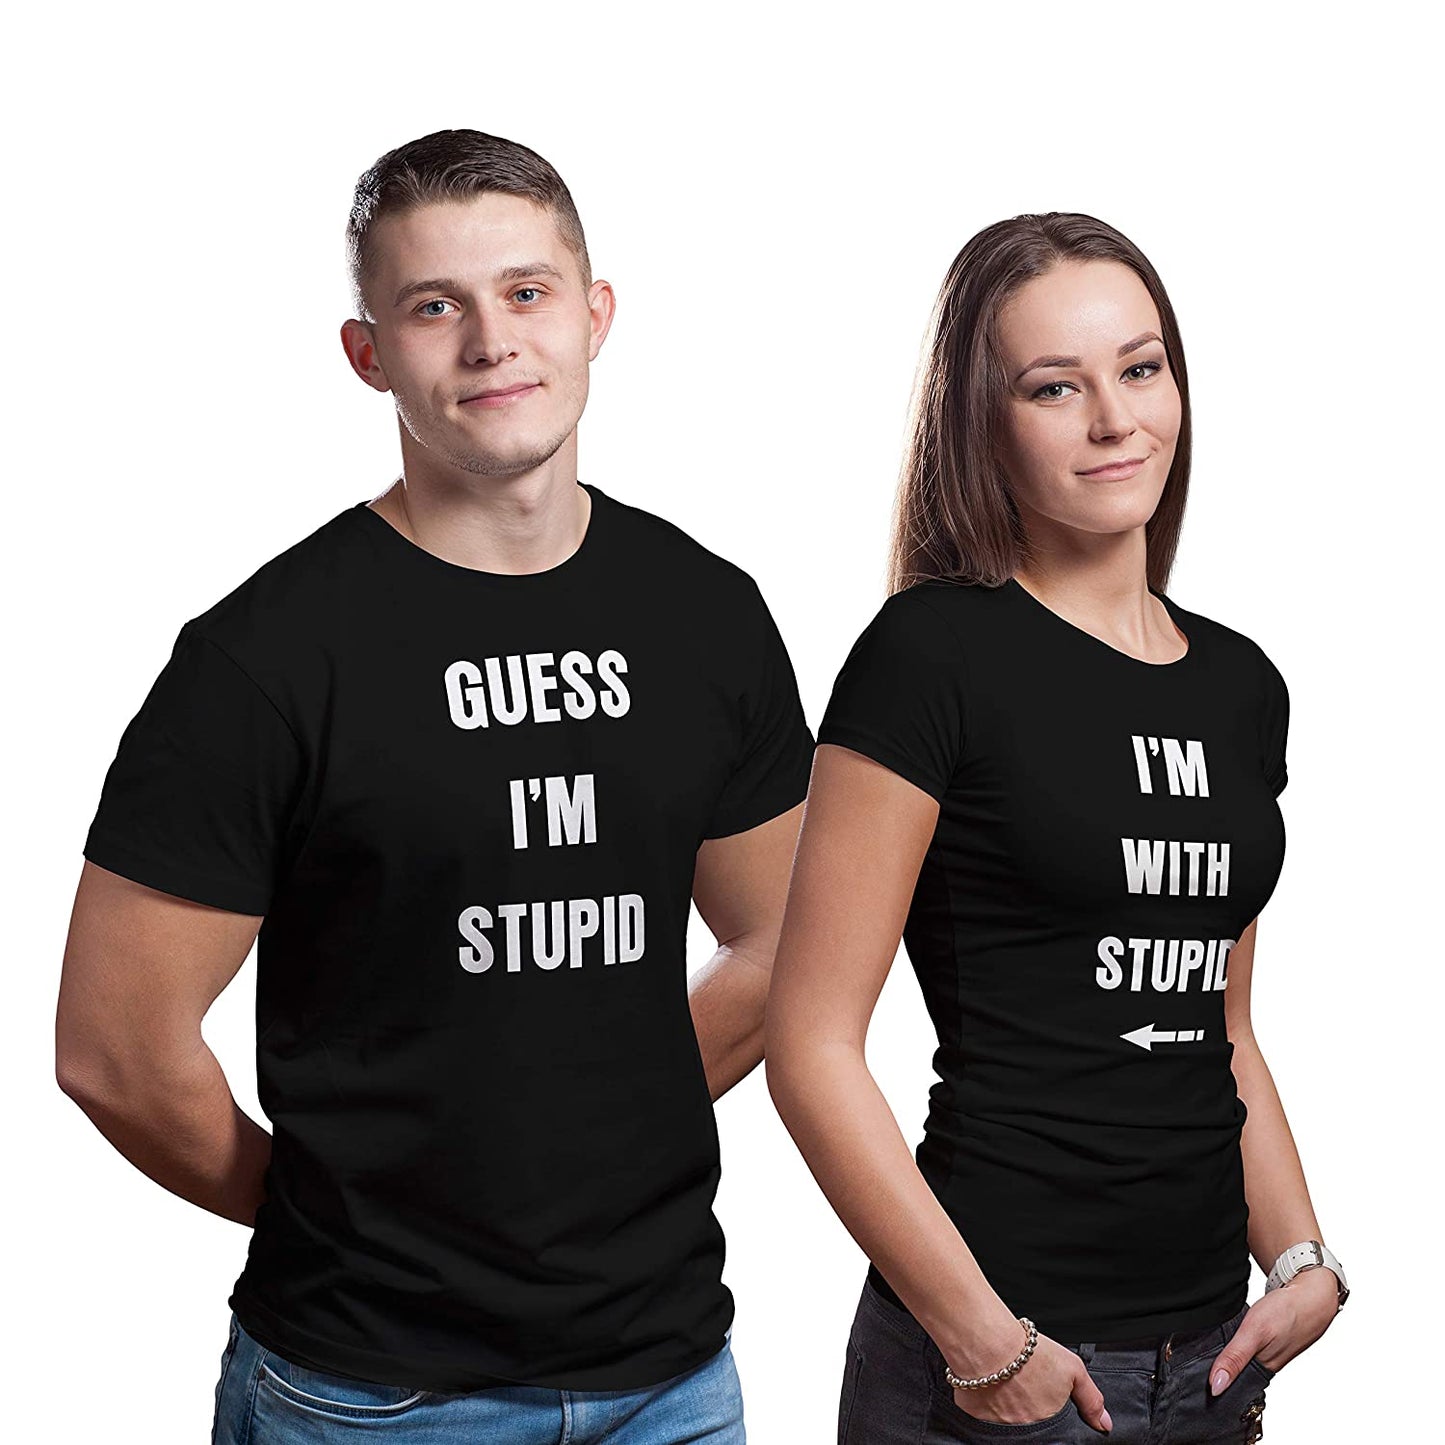 I am with Stupid matching Couple T shirts- White Black